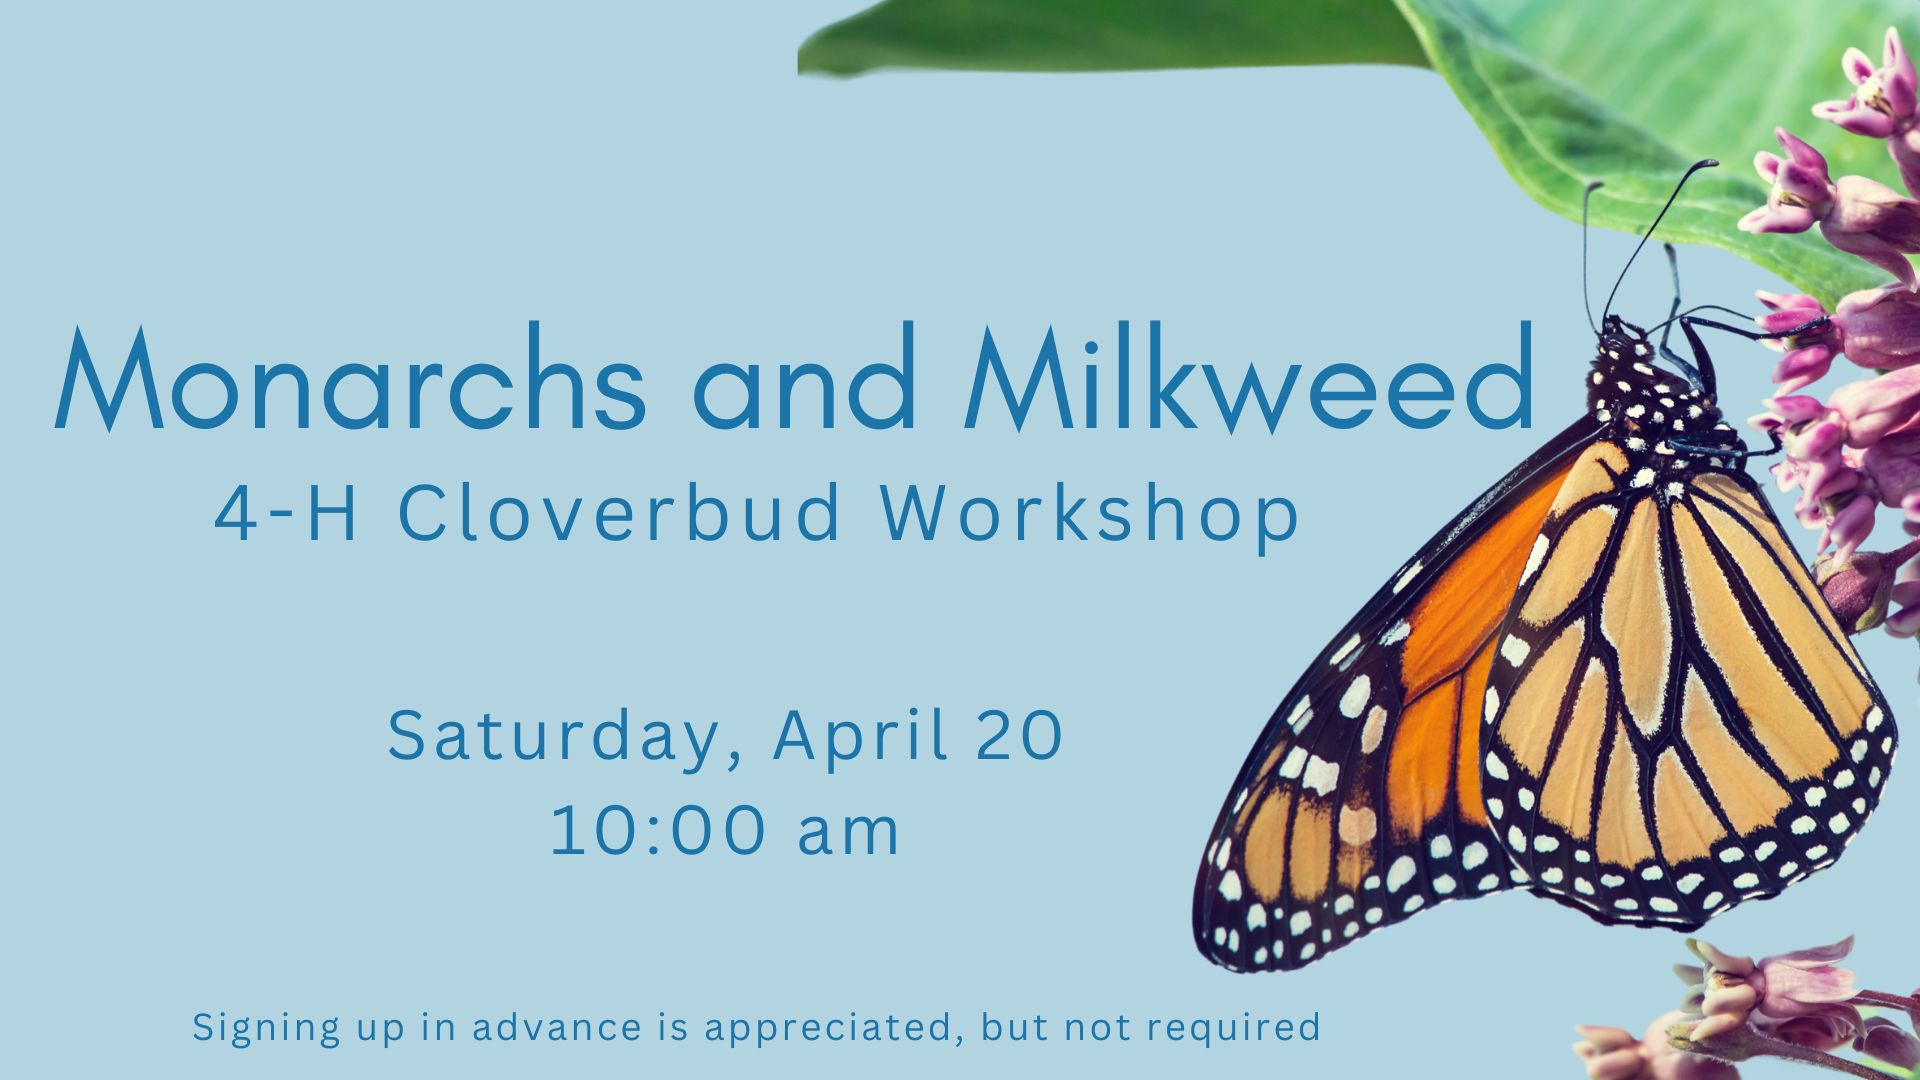 Monarchs and Milkweed 4-H Cloverbud Workshop